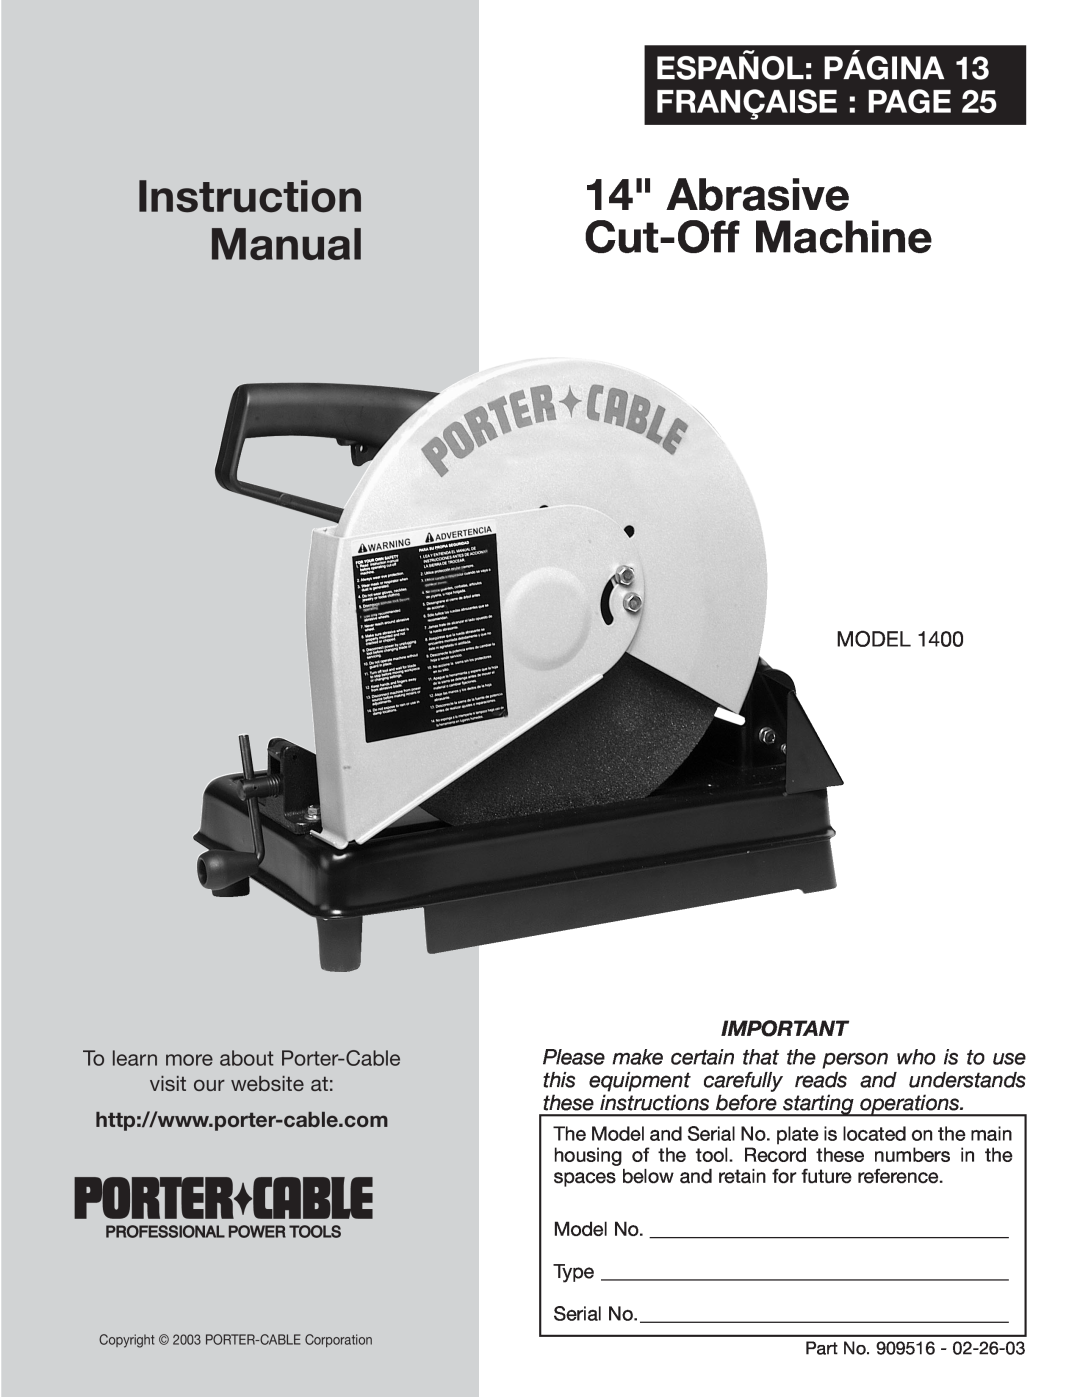 Porter-Cable 1400 instruction manual Español Página, Française Page, Instruction, Abrasive, Manual, Cut-Off Machine, Model 